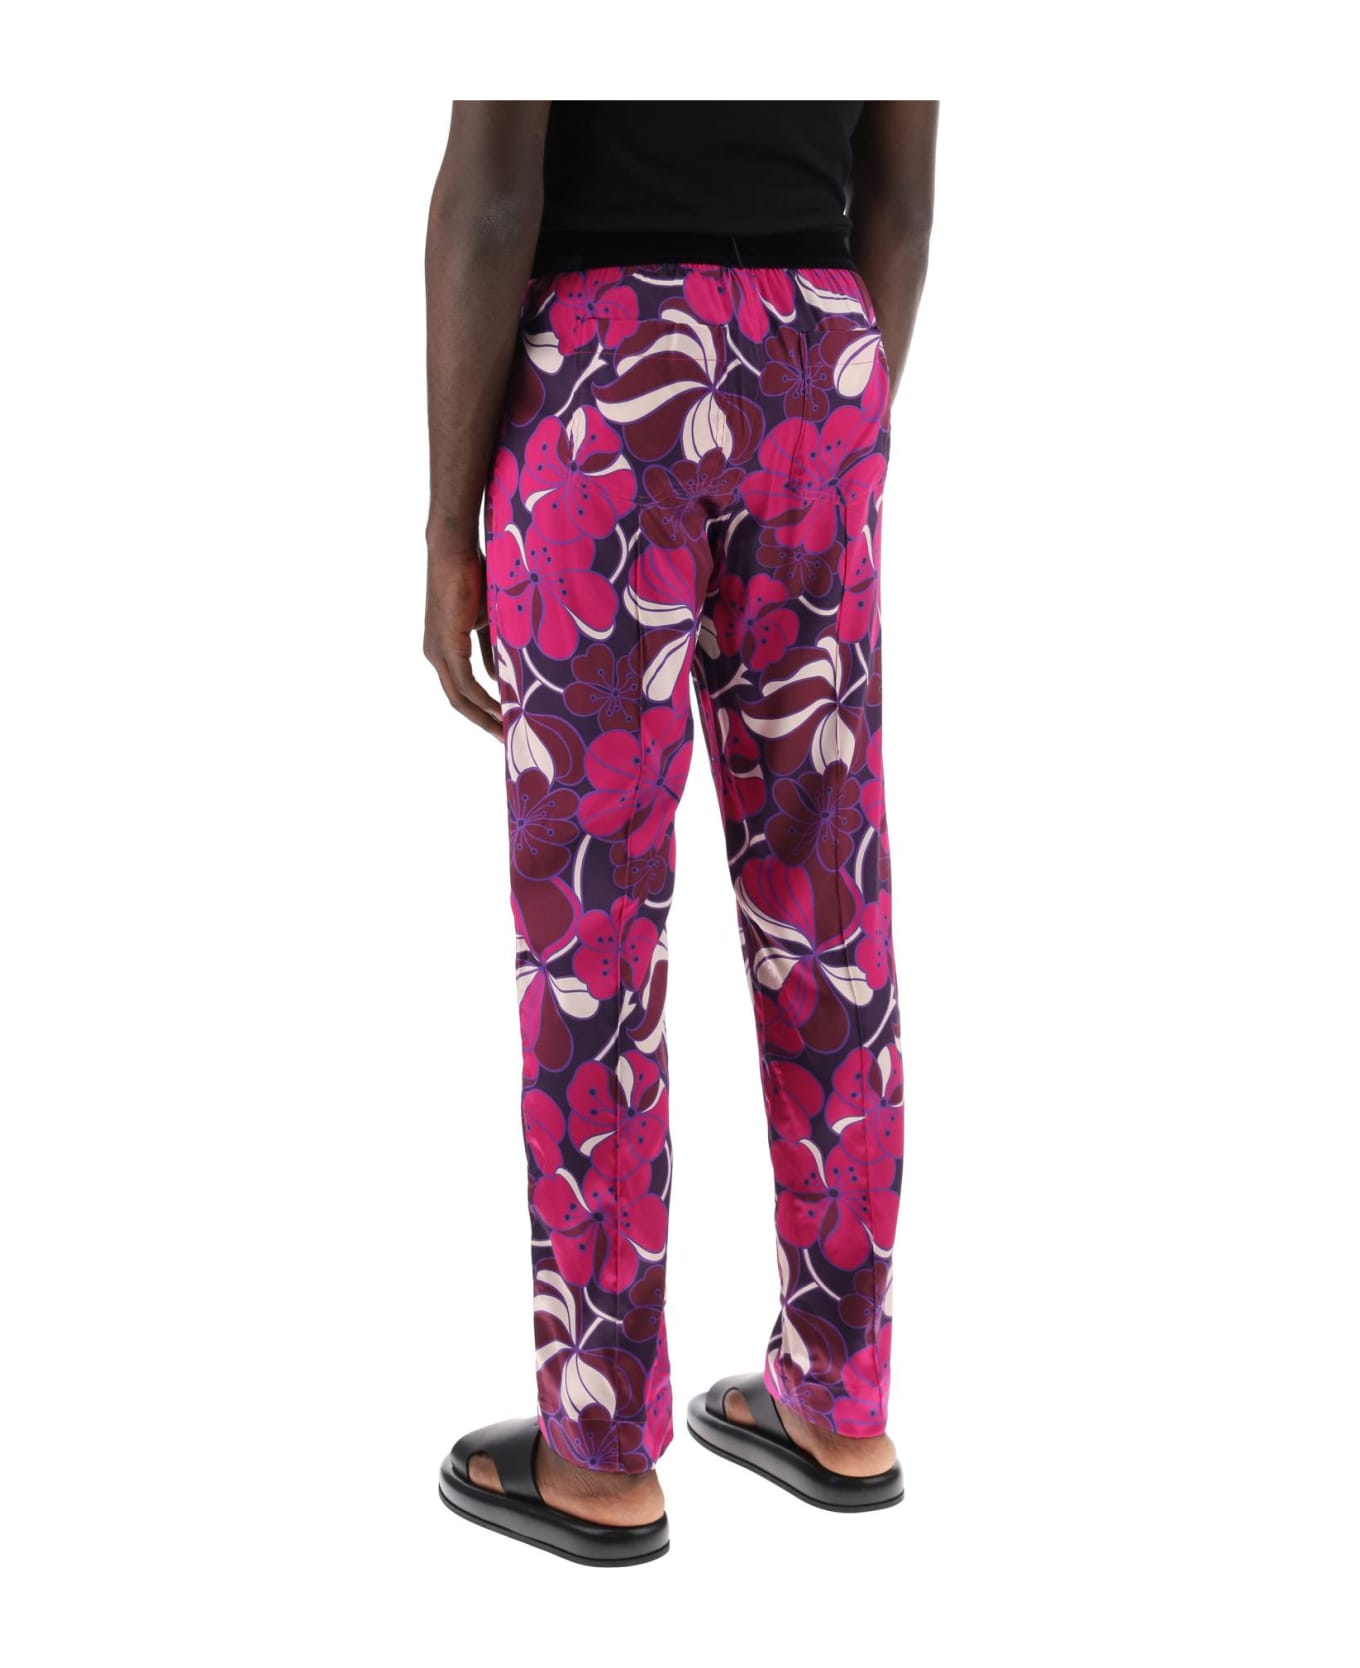 Tom Ford Pajama Pants In Floral Silk - ROSA BRILLANTE FANTASIA (Purple)